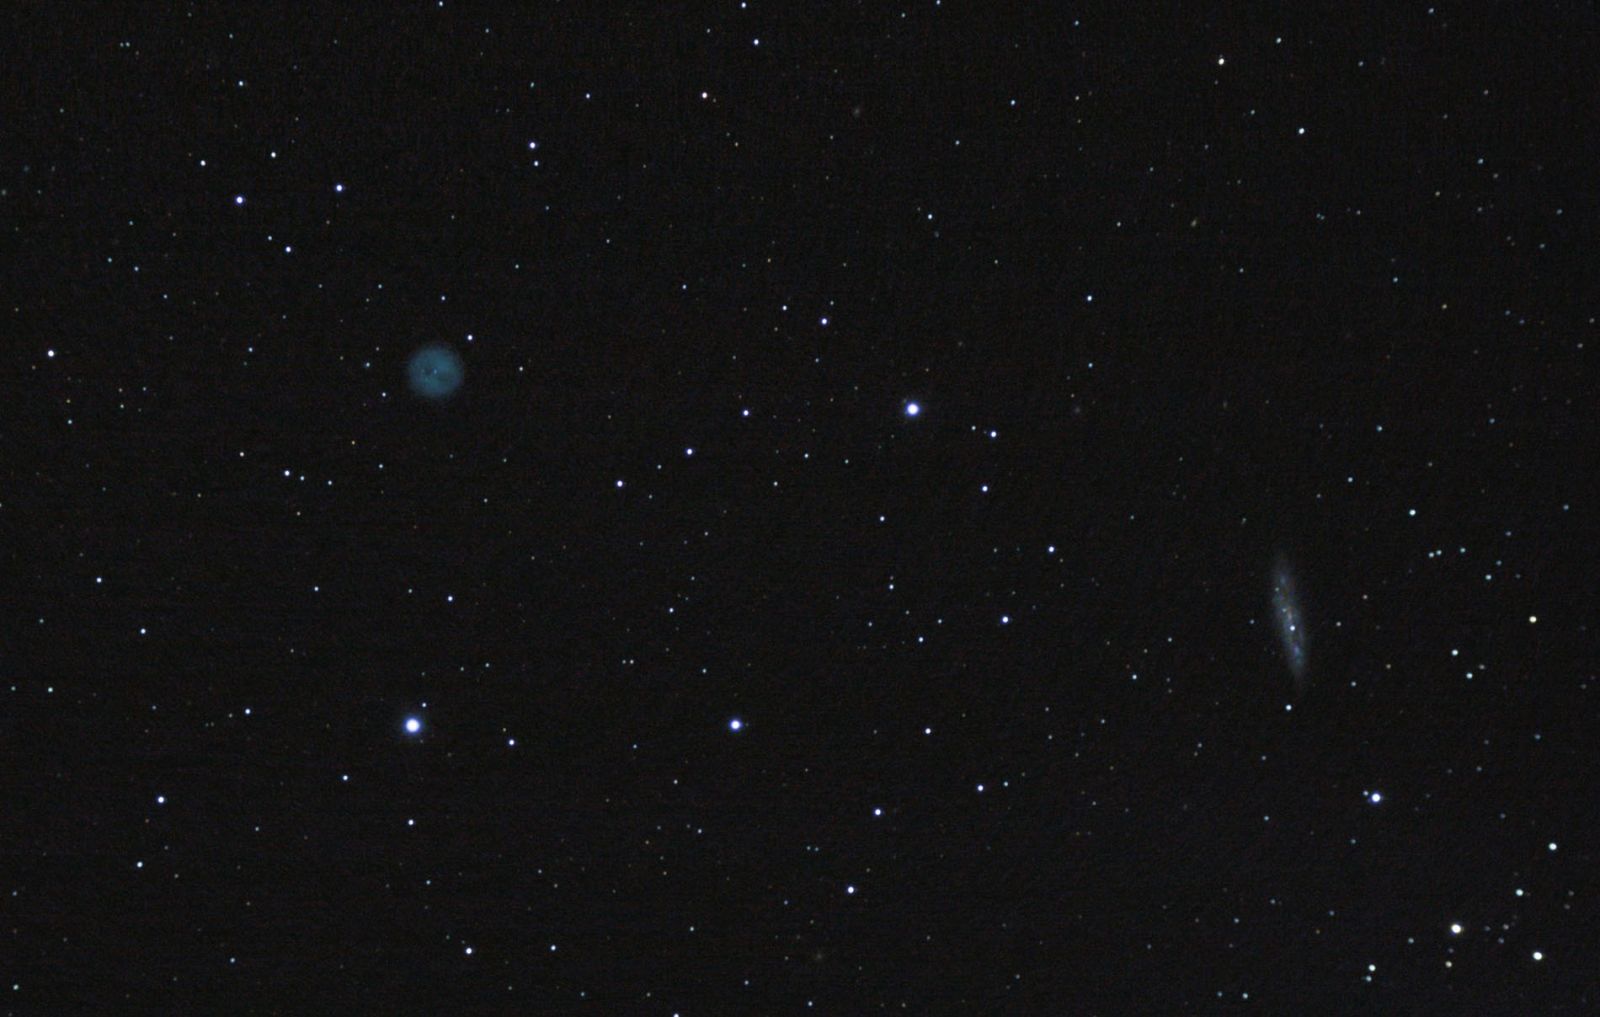 M97 Owl Nebula   M108 Galaxy Wide 28 Frames   15m08s   Cropped, Small PS CS5